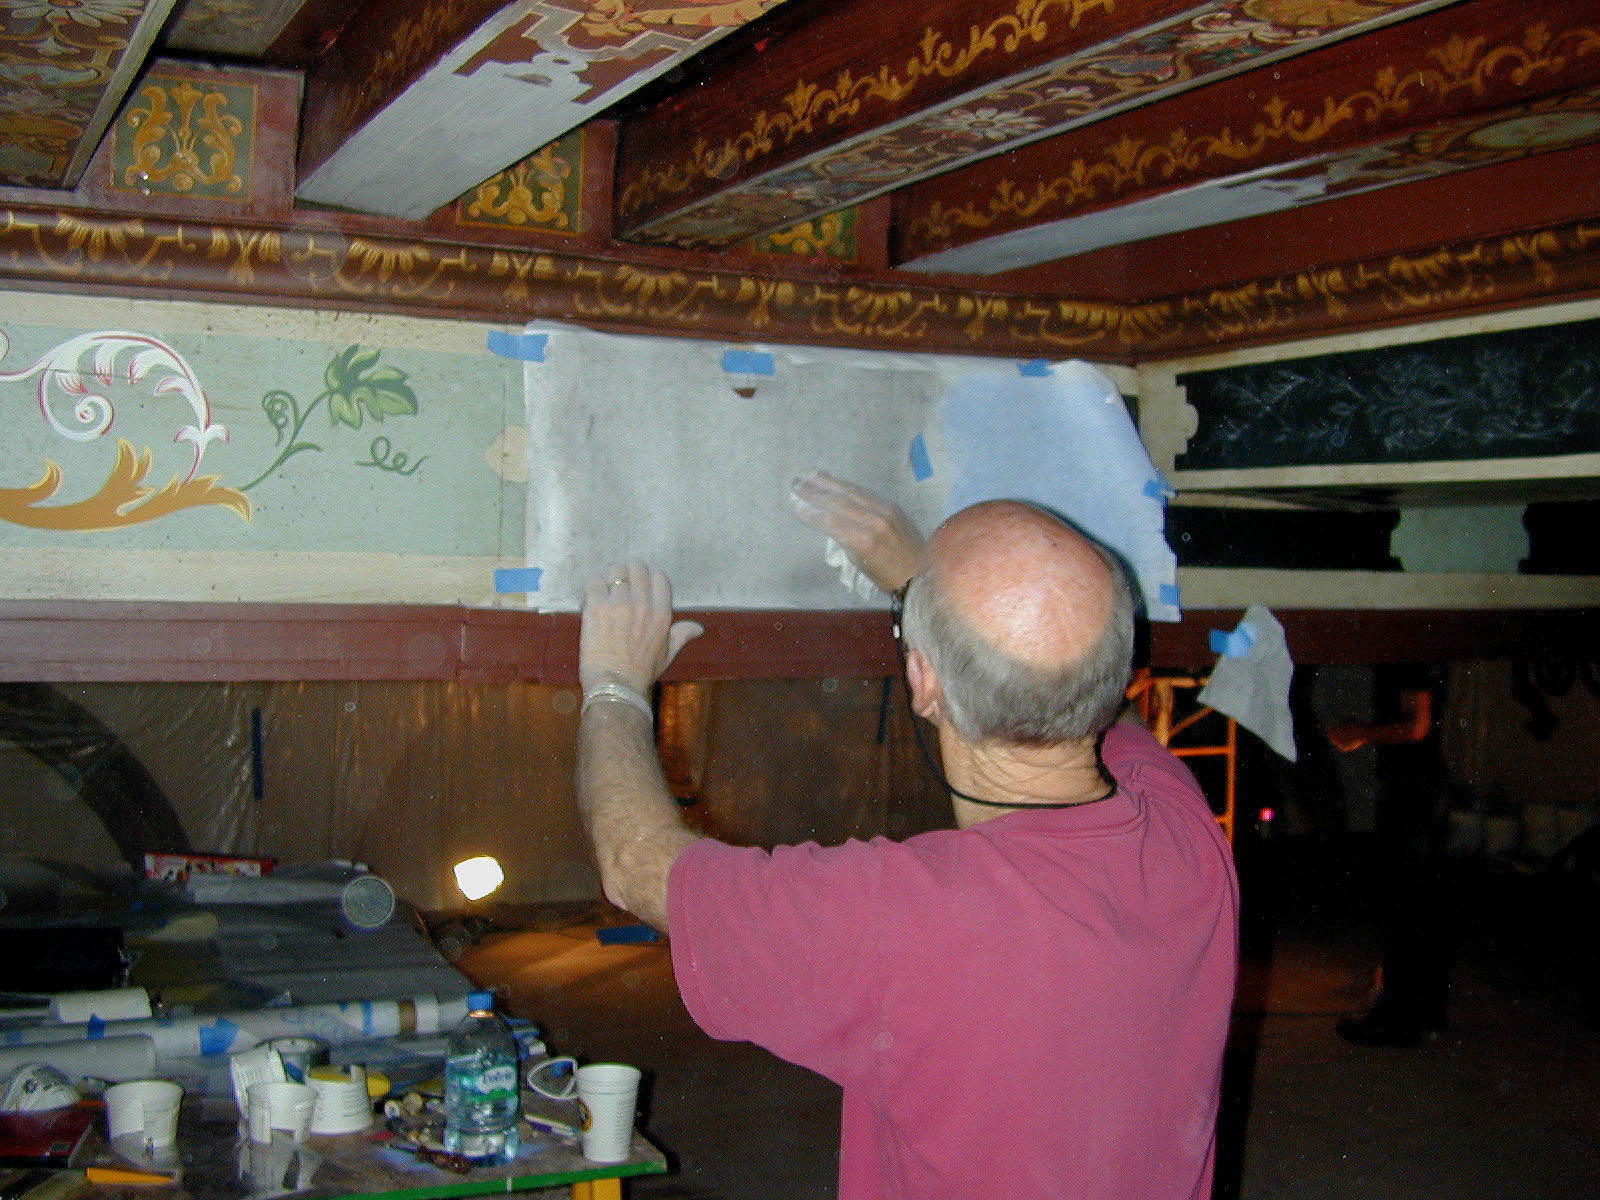 Restoration of Music Room Ceiling Using Templates, 2007